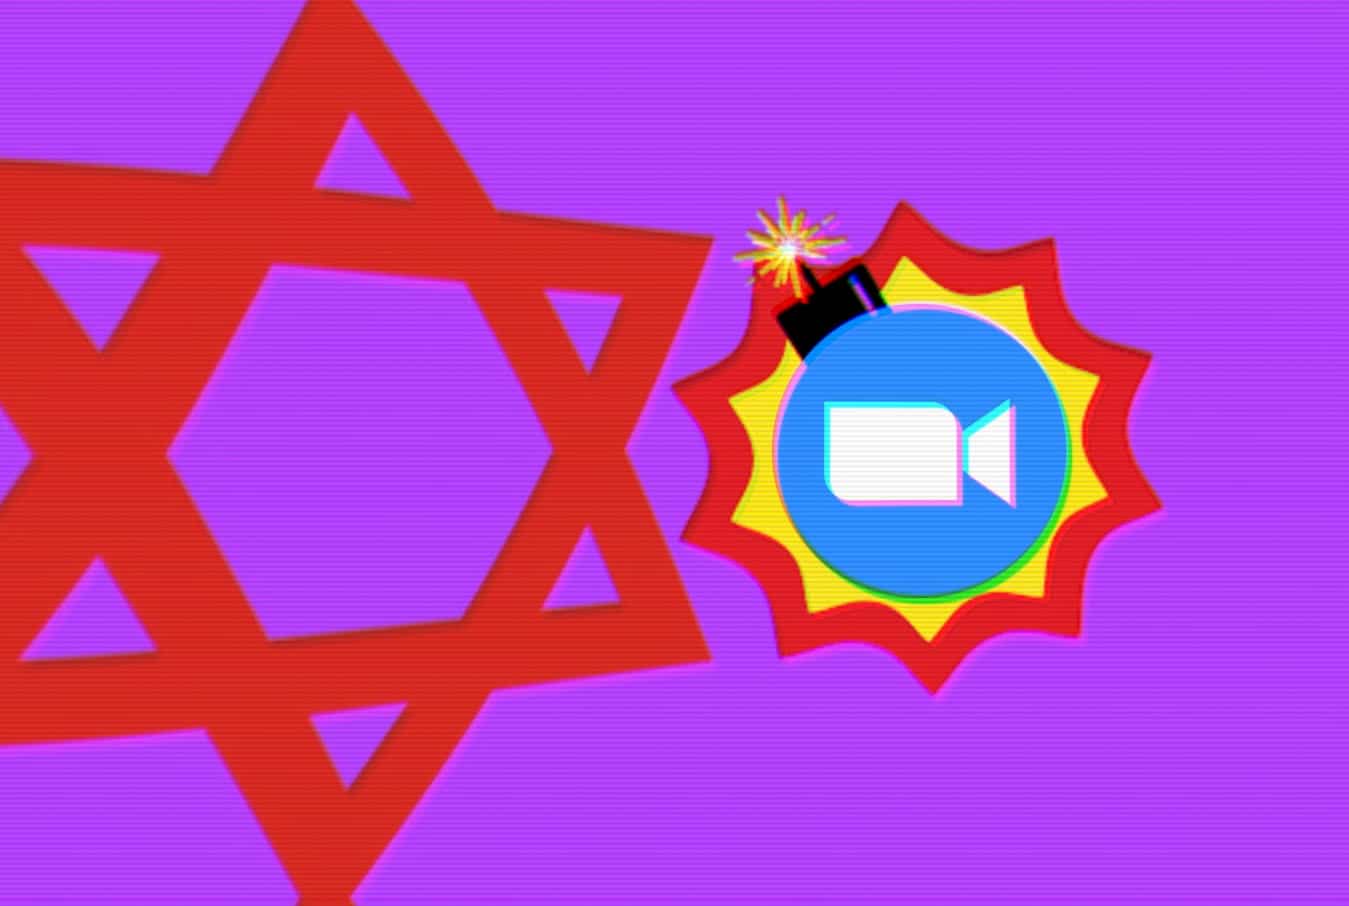 Online Jewish service 'Zoom bombed' with hate speech & Swastikas